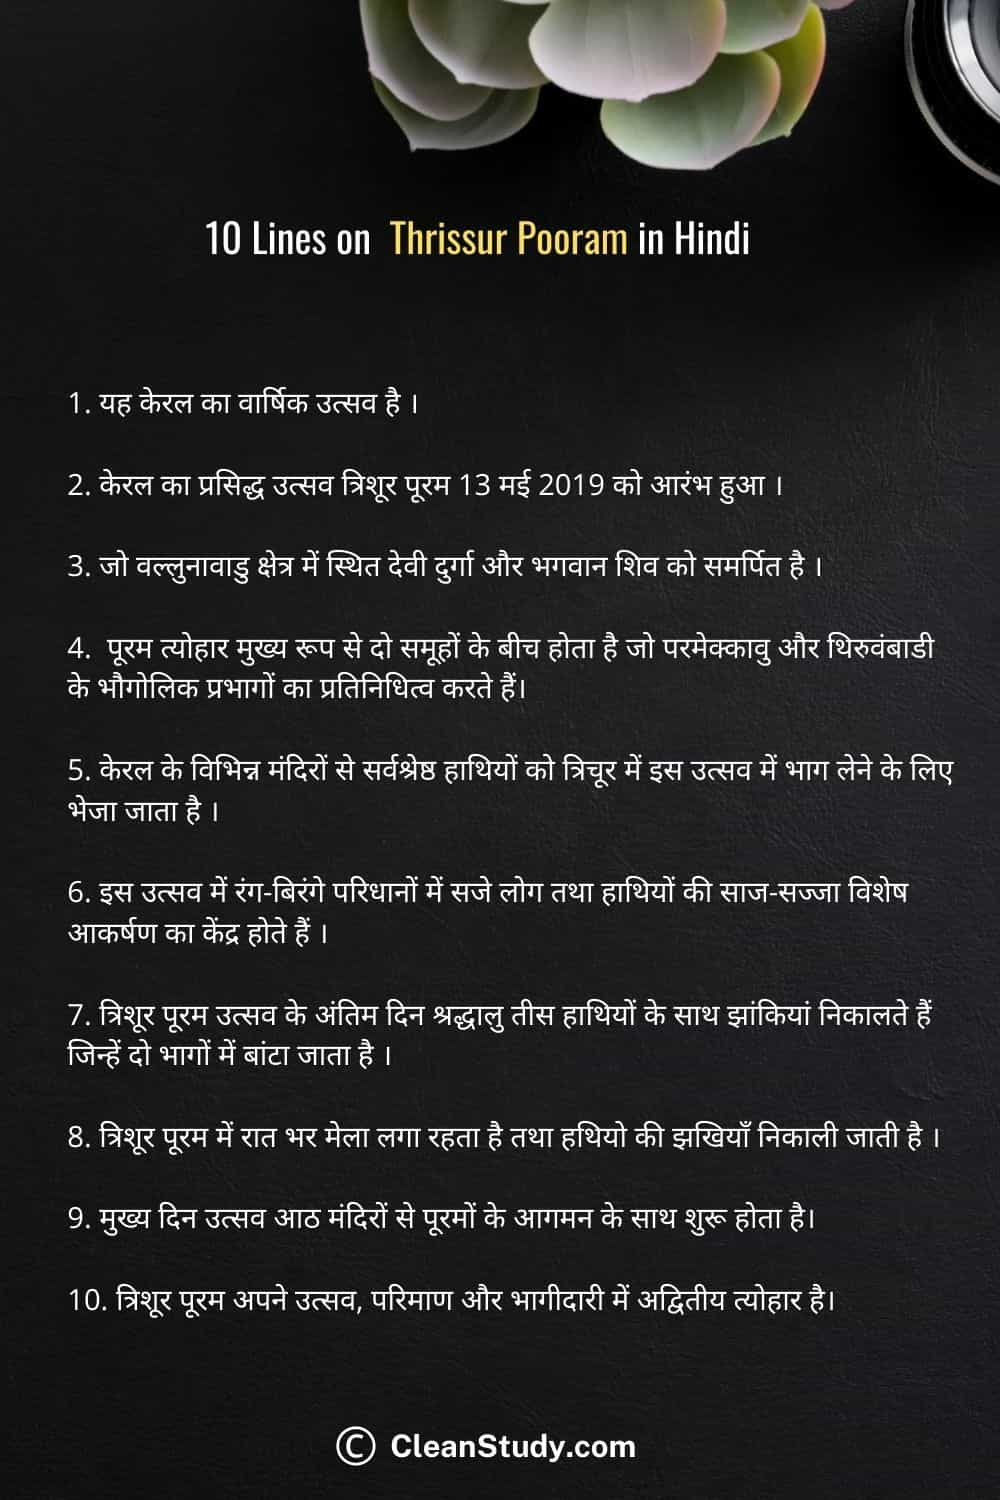 10 lines on Thrissur Pooram  in hindi